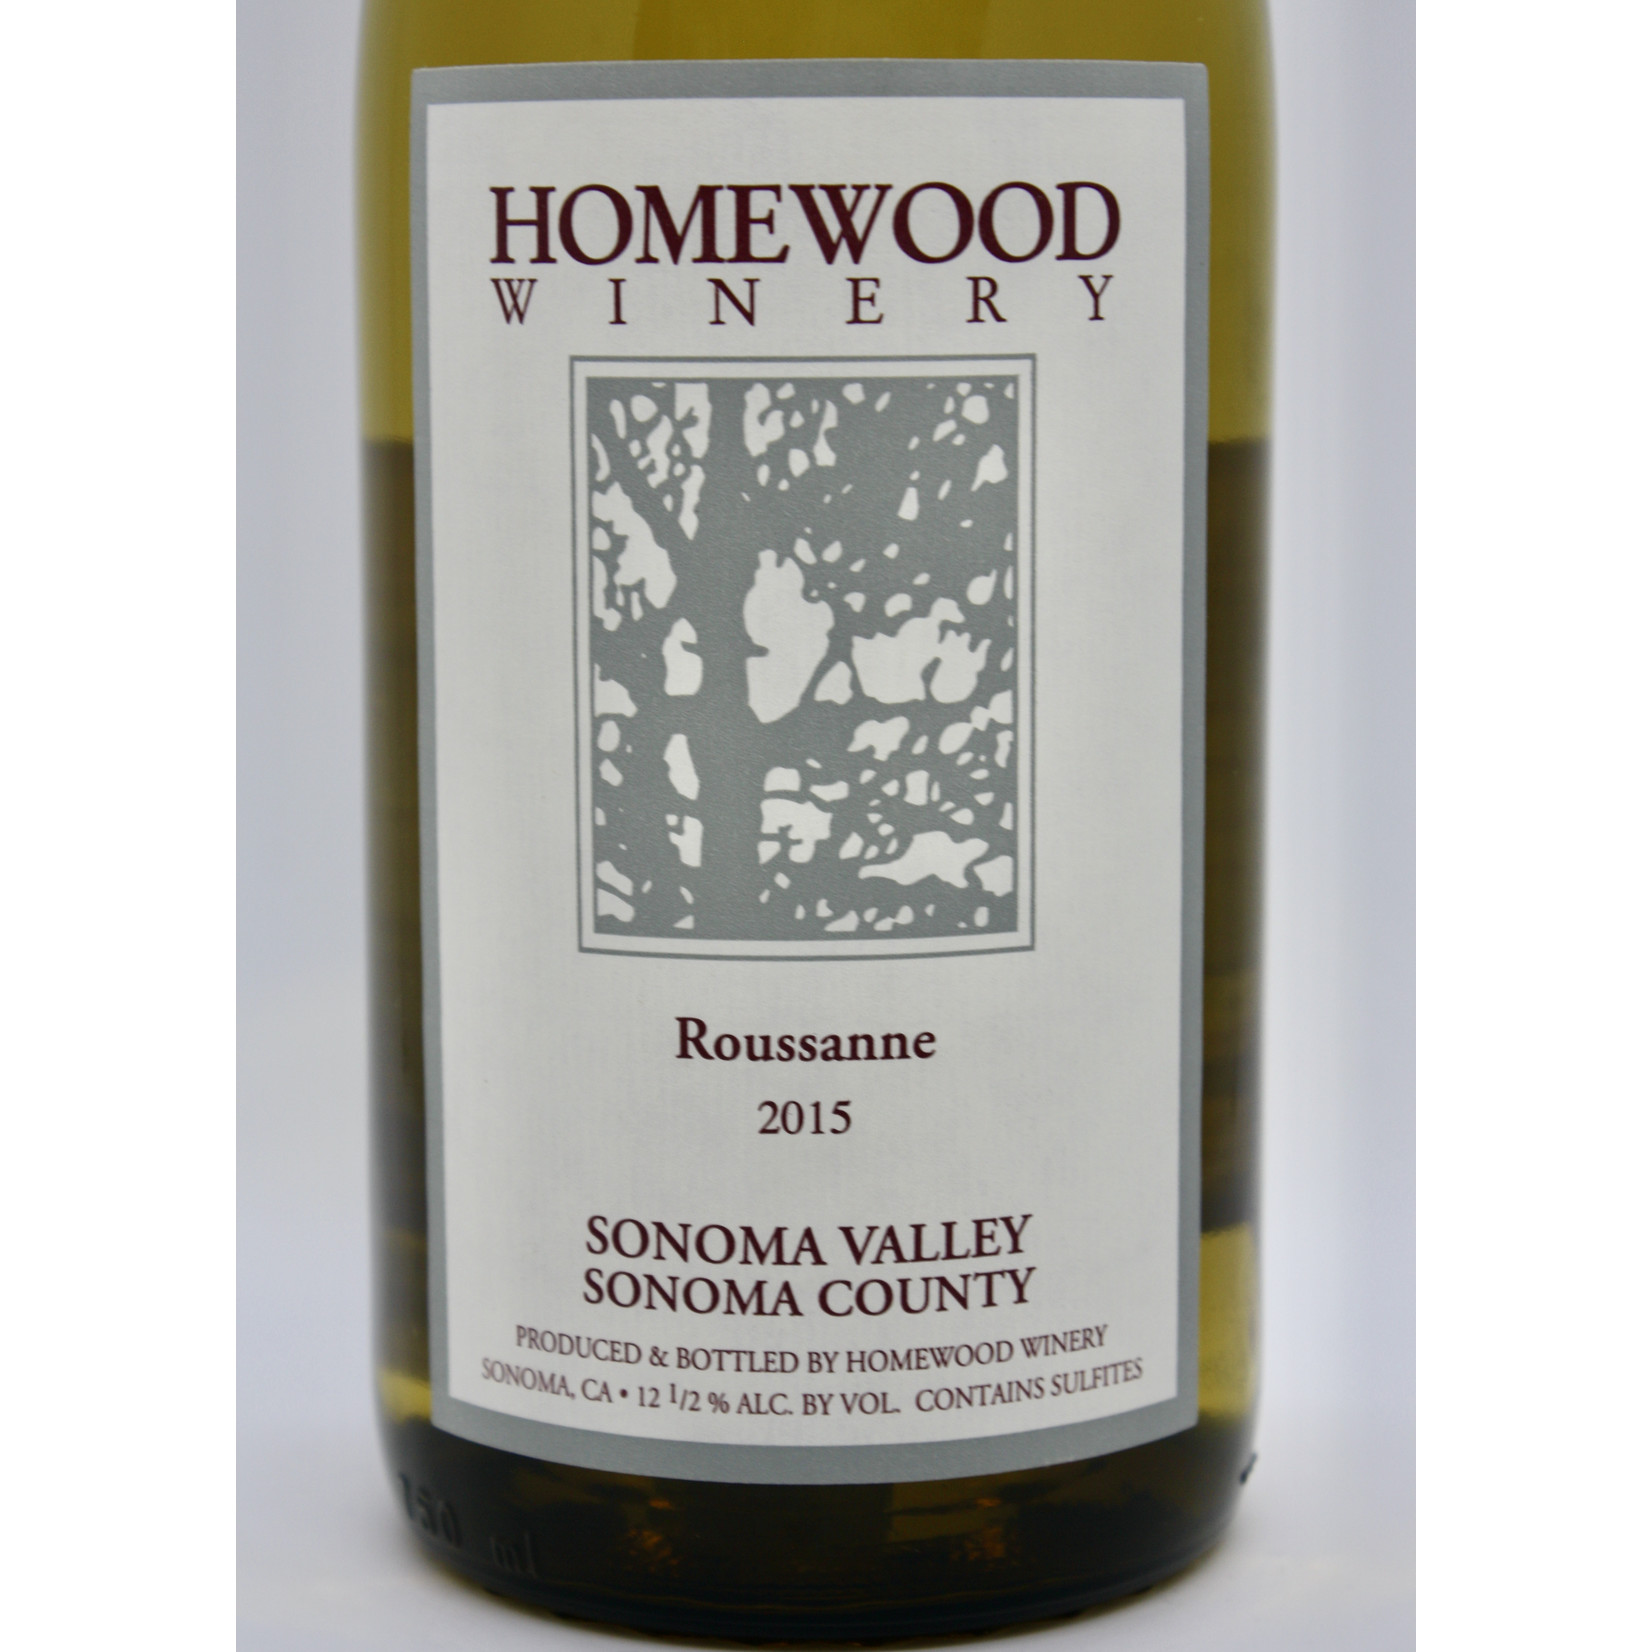 Homewood Winery Homewood Vineyard, Roussanne 2015, Sonoma Valley, CA, USA